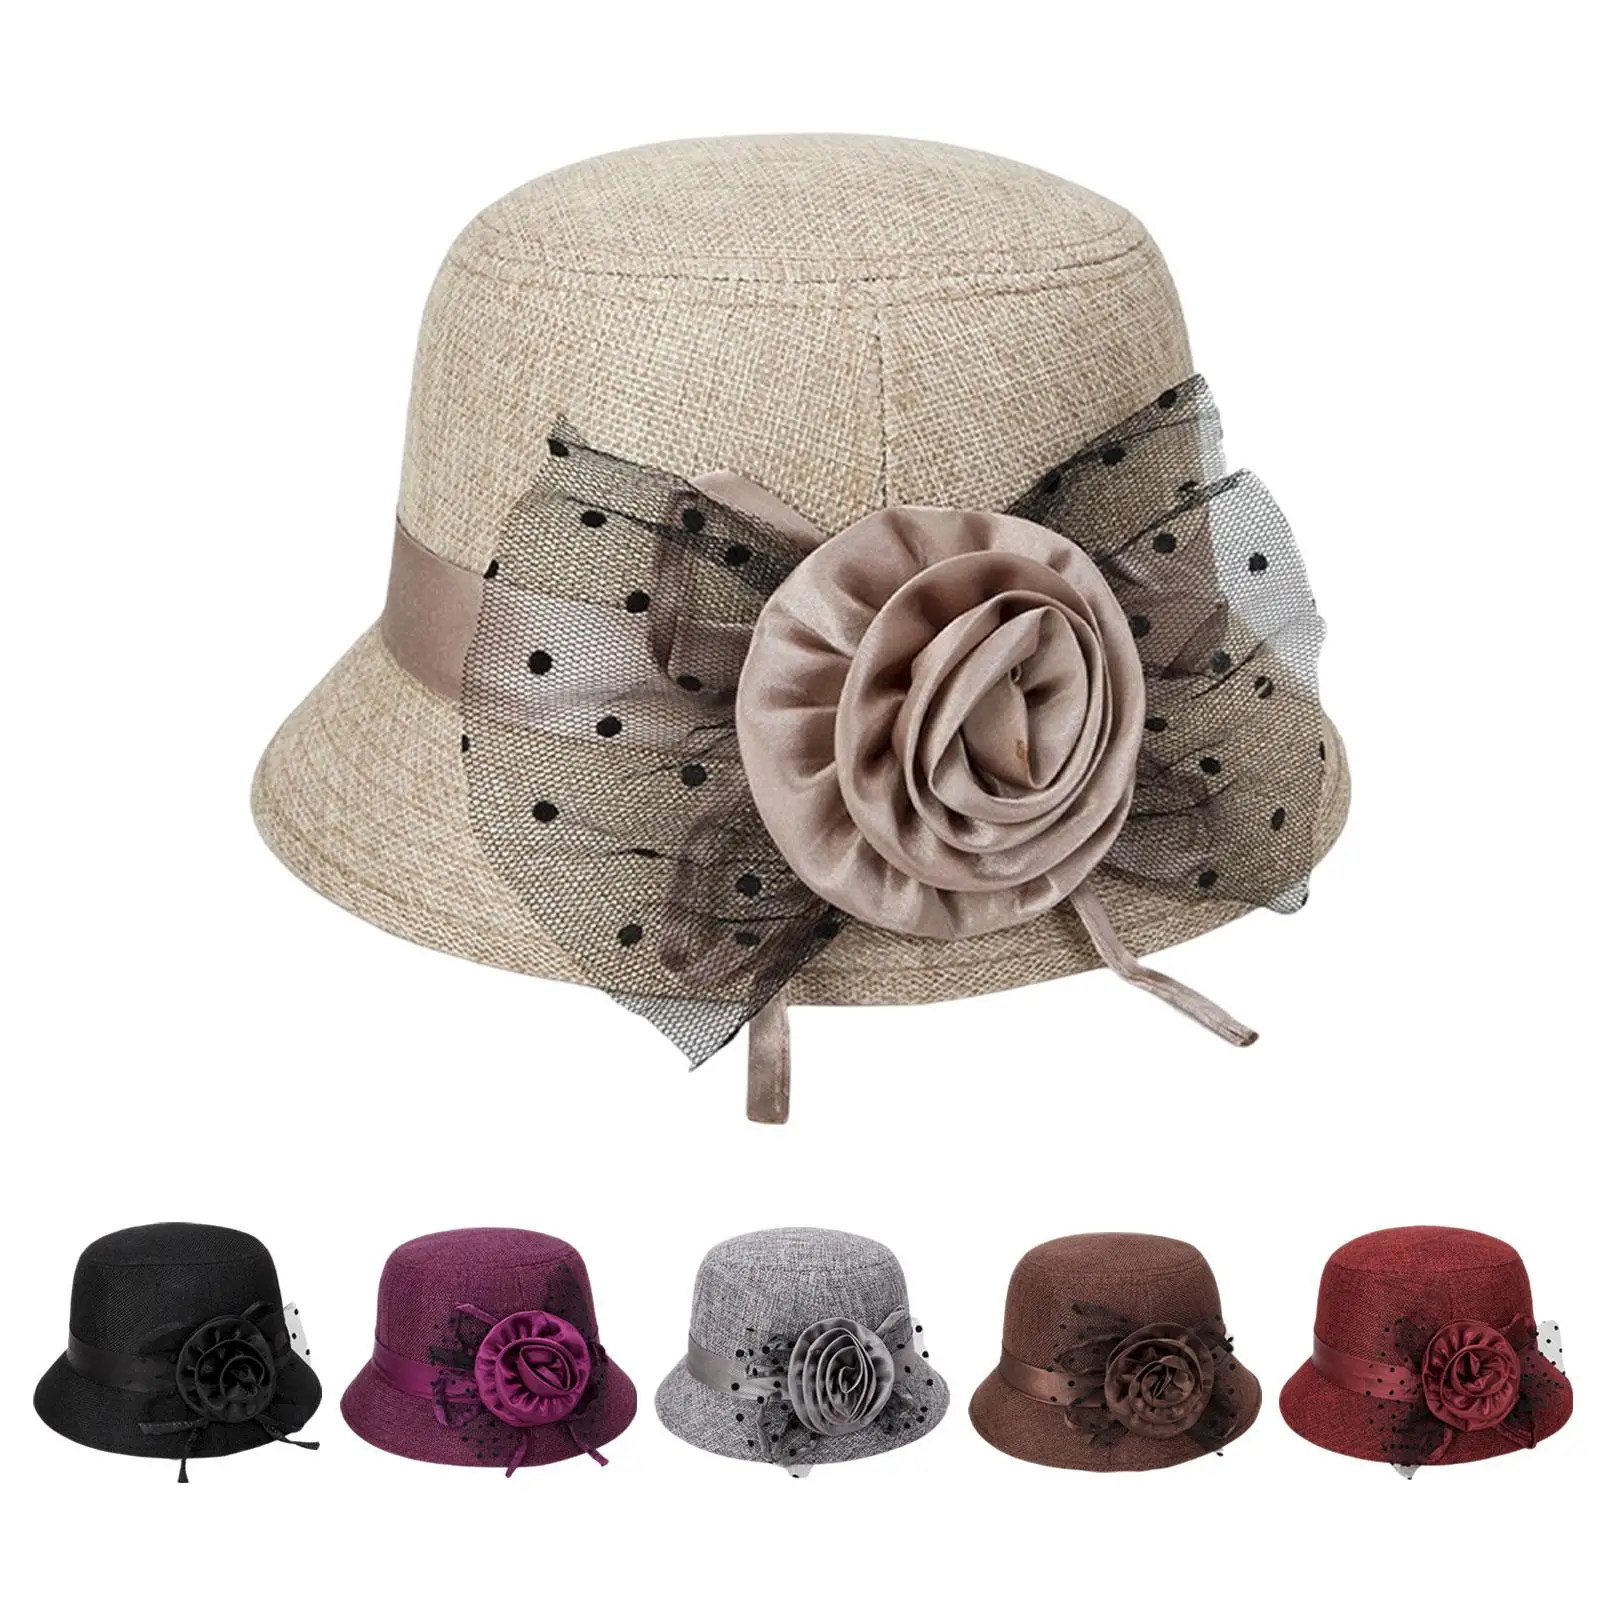 Women Top Hat Decorative Sun Protection Beach Sun Hat Fashion Bucket Hat Casual Sunhat Summer Hat for Summer Photo Props Outdoor